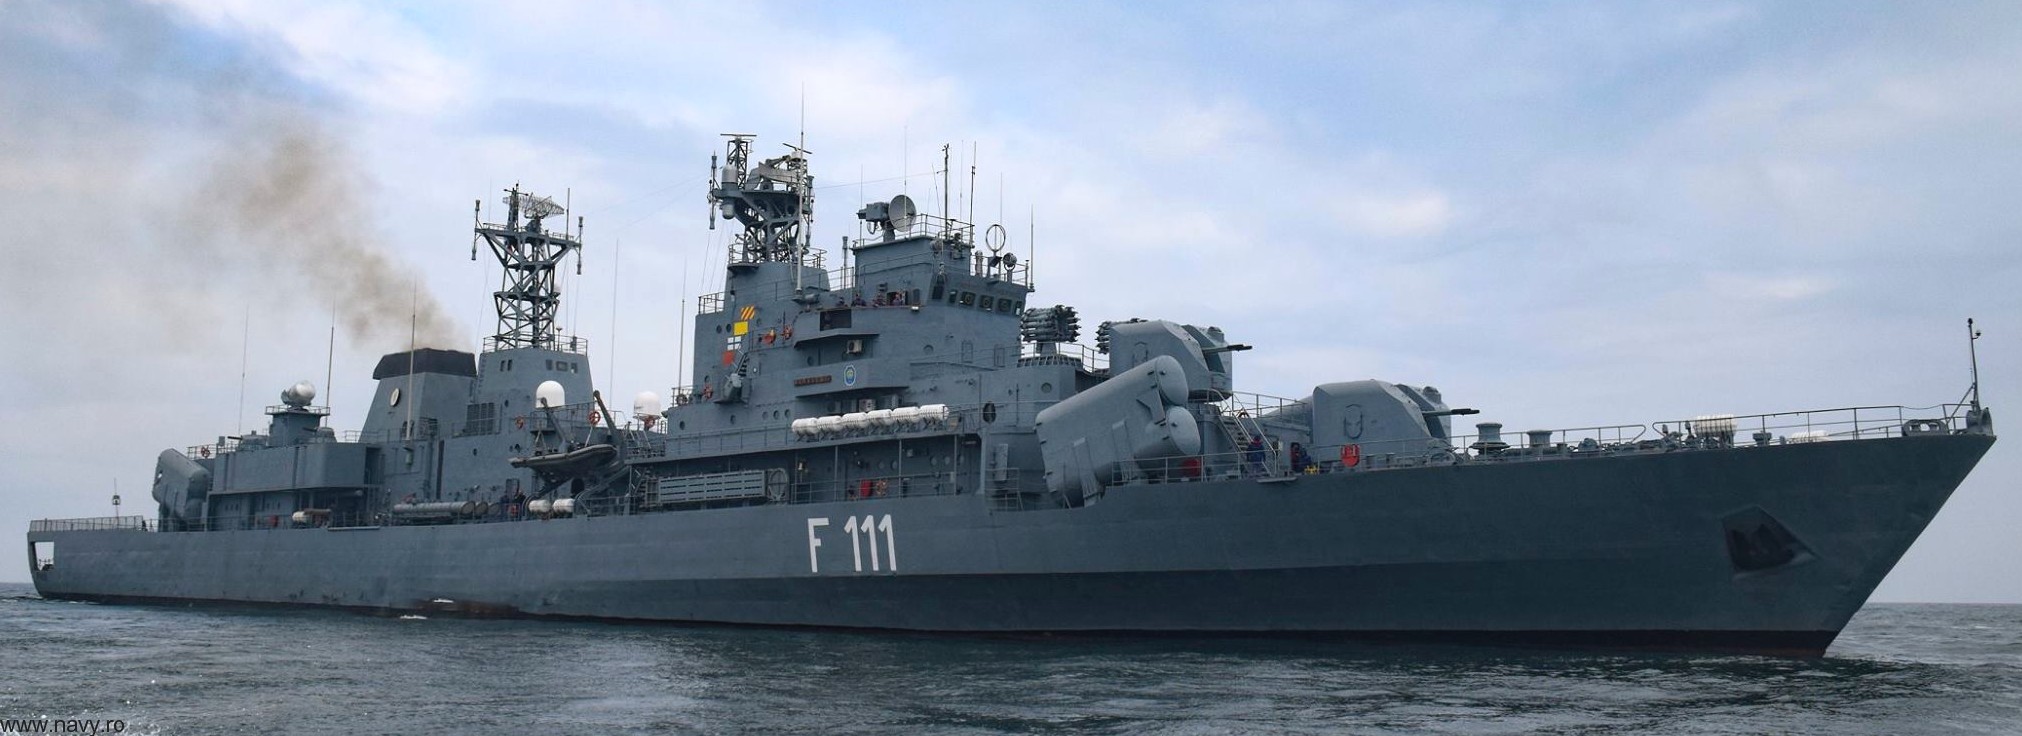 f-111 ros marasesti frigate romanian navy missile ssm 04